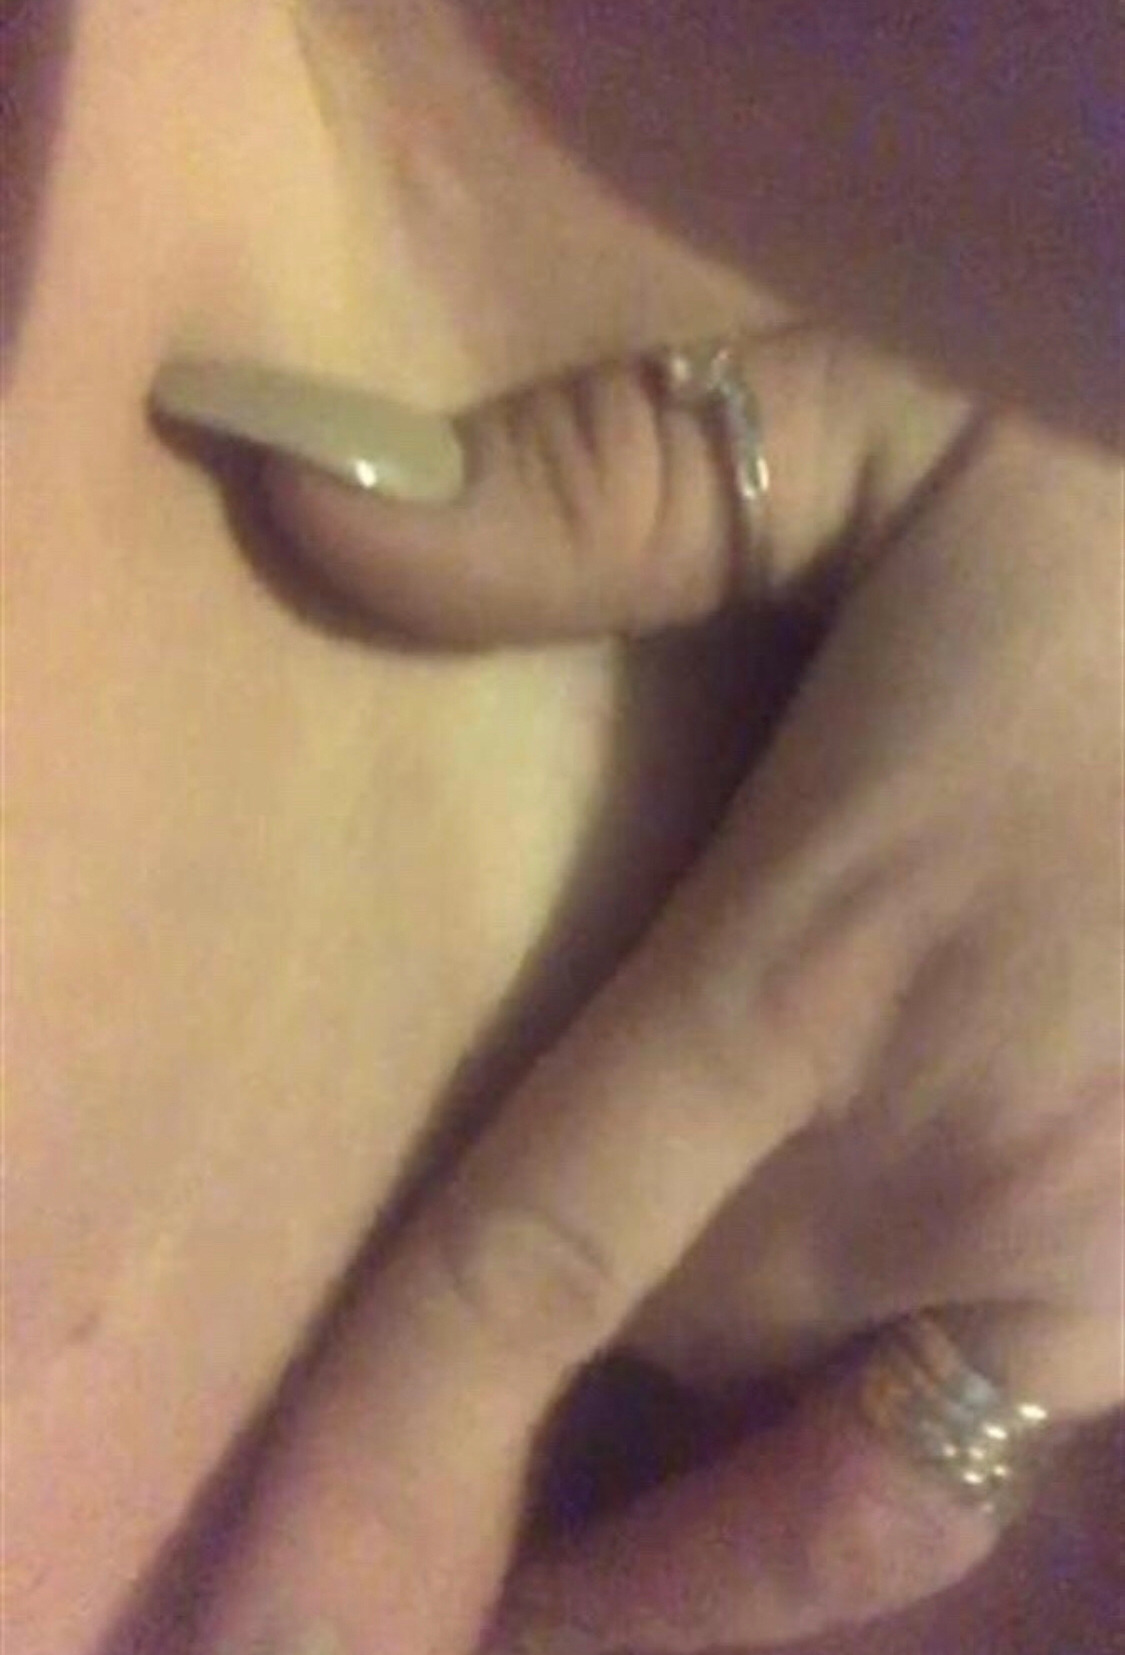 Me fingering my big and juicy twat